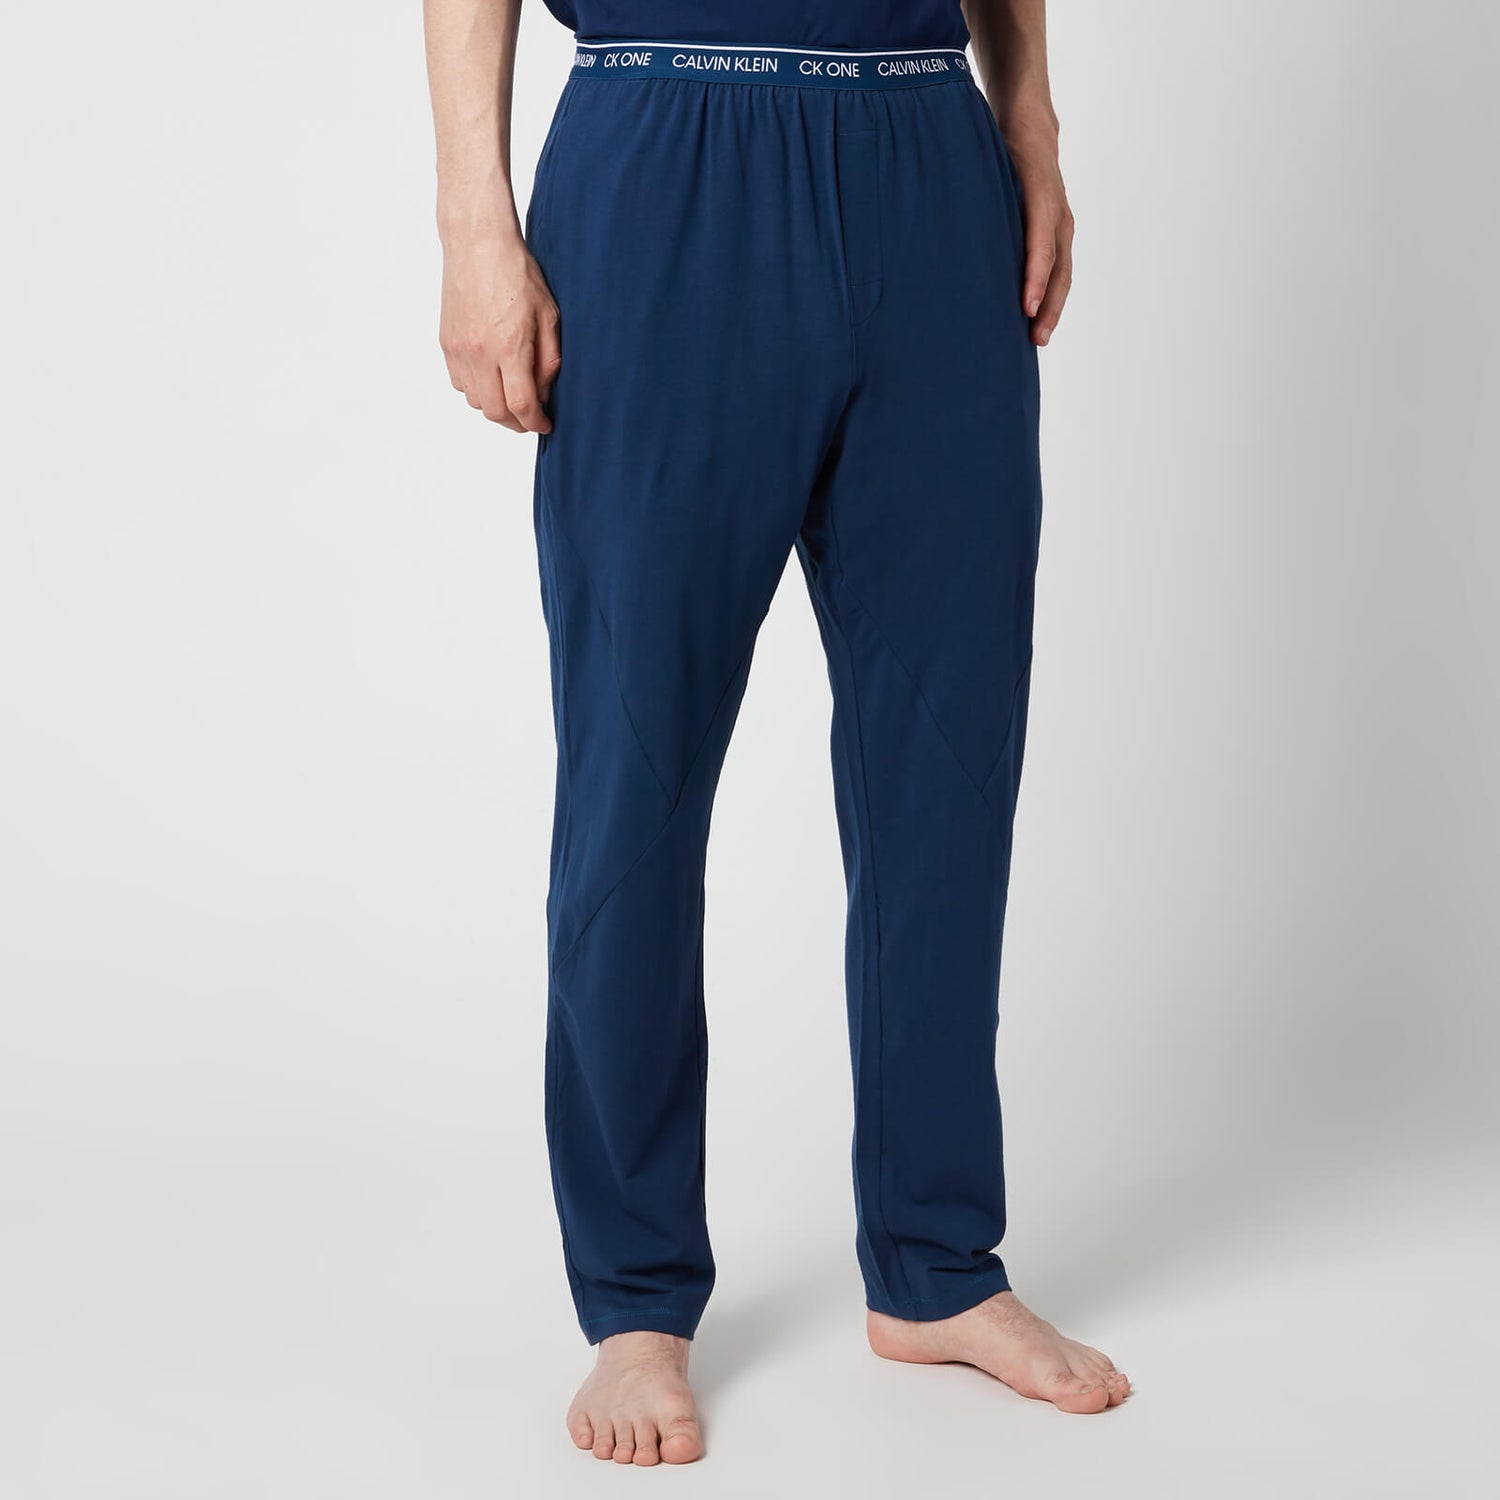 Calvin Klein Men's CK One Pyjama Pants - Lake Crest Blue